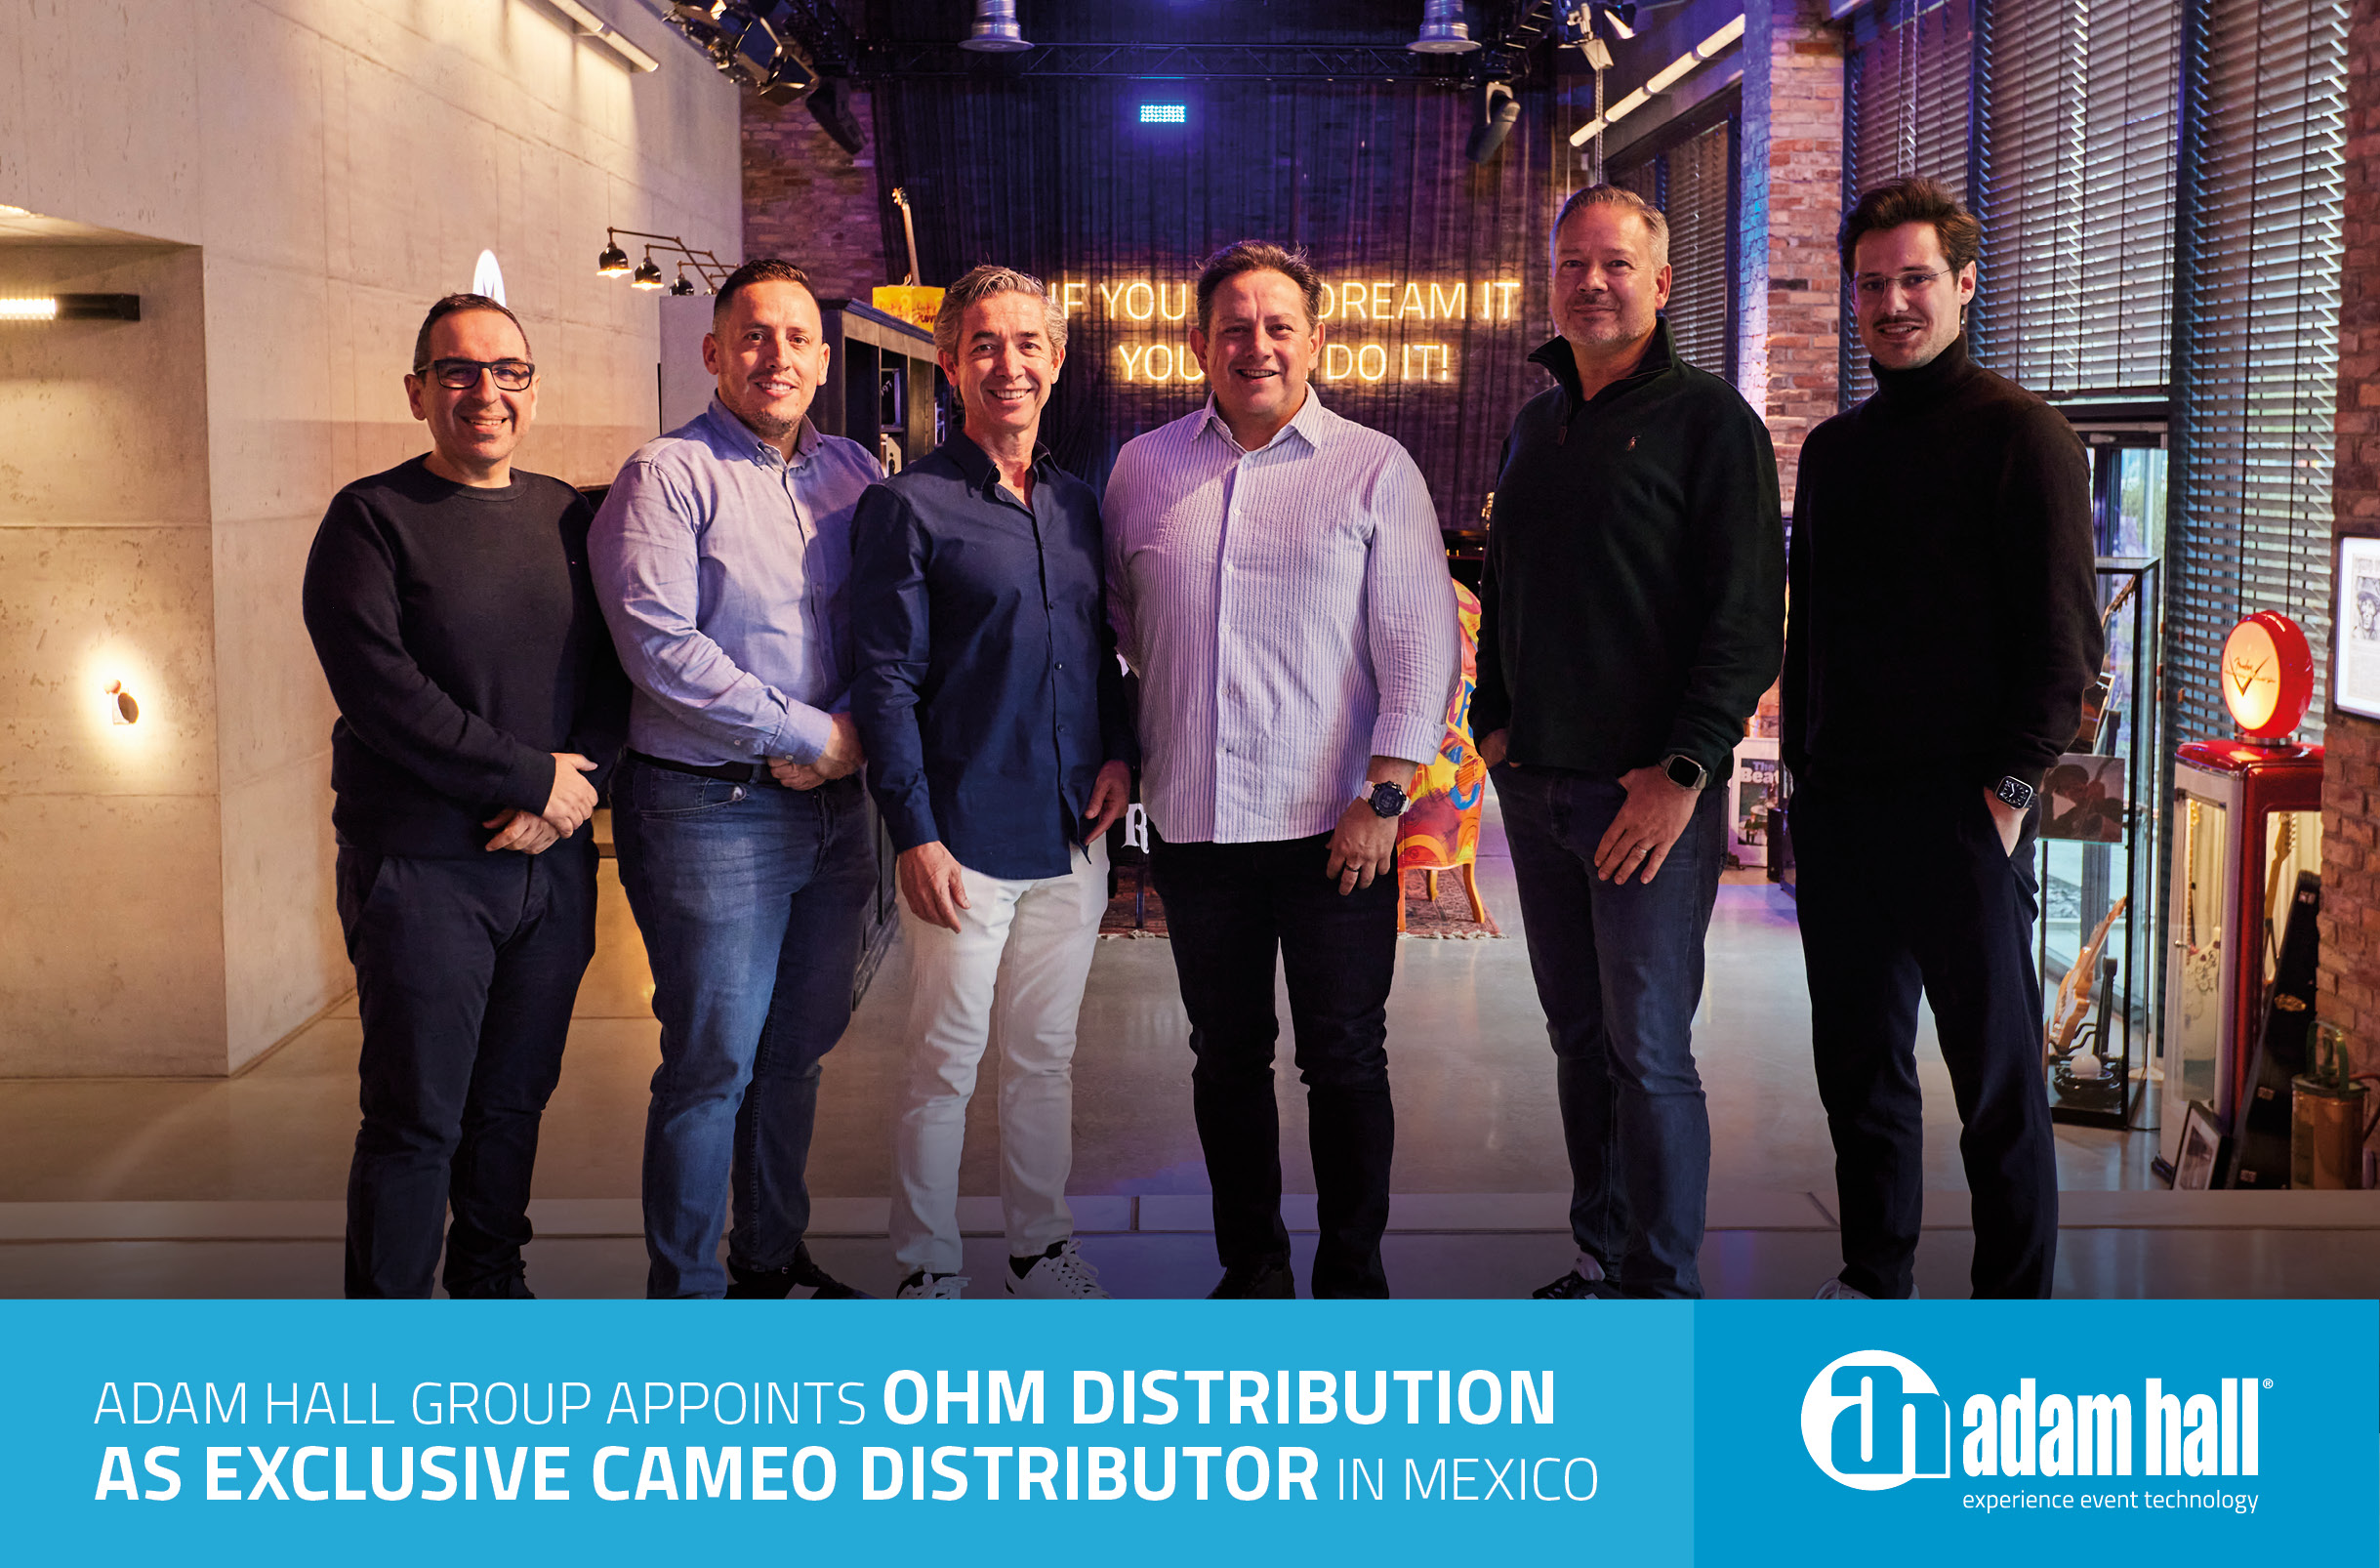 Nombramos a OHM Distribution socio distribuidor exclusivo de Cameo en México